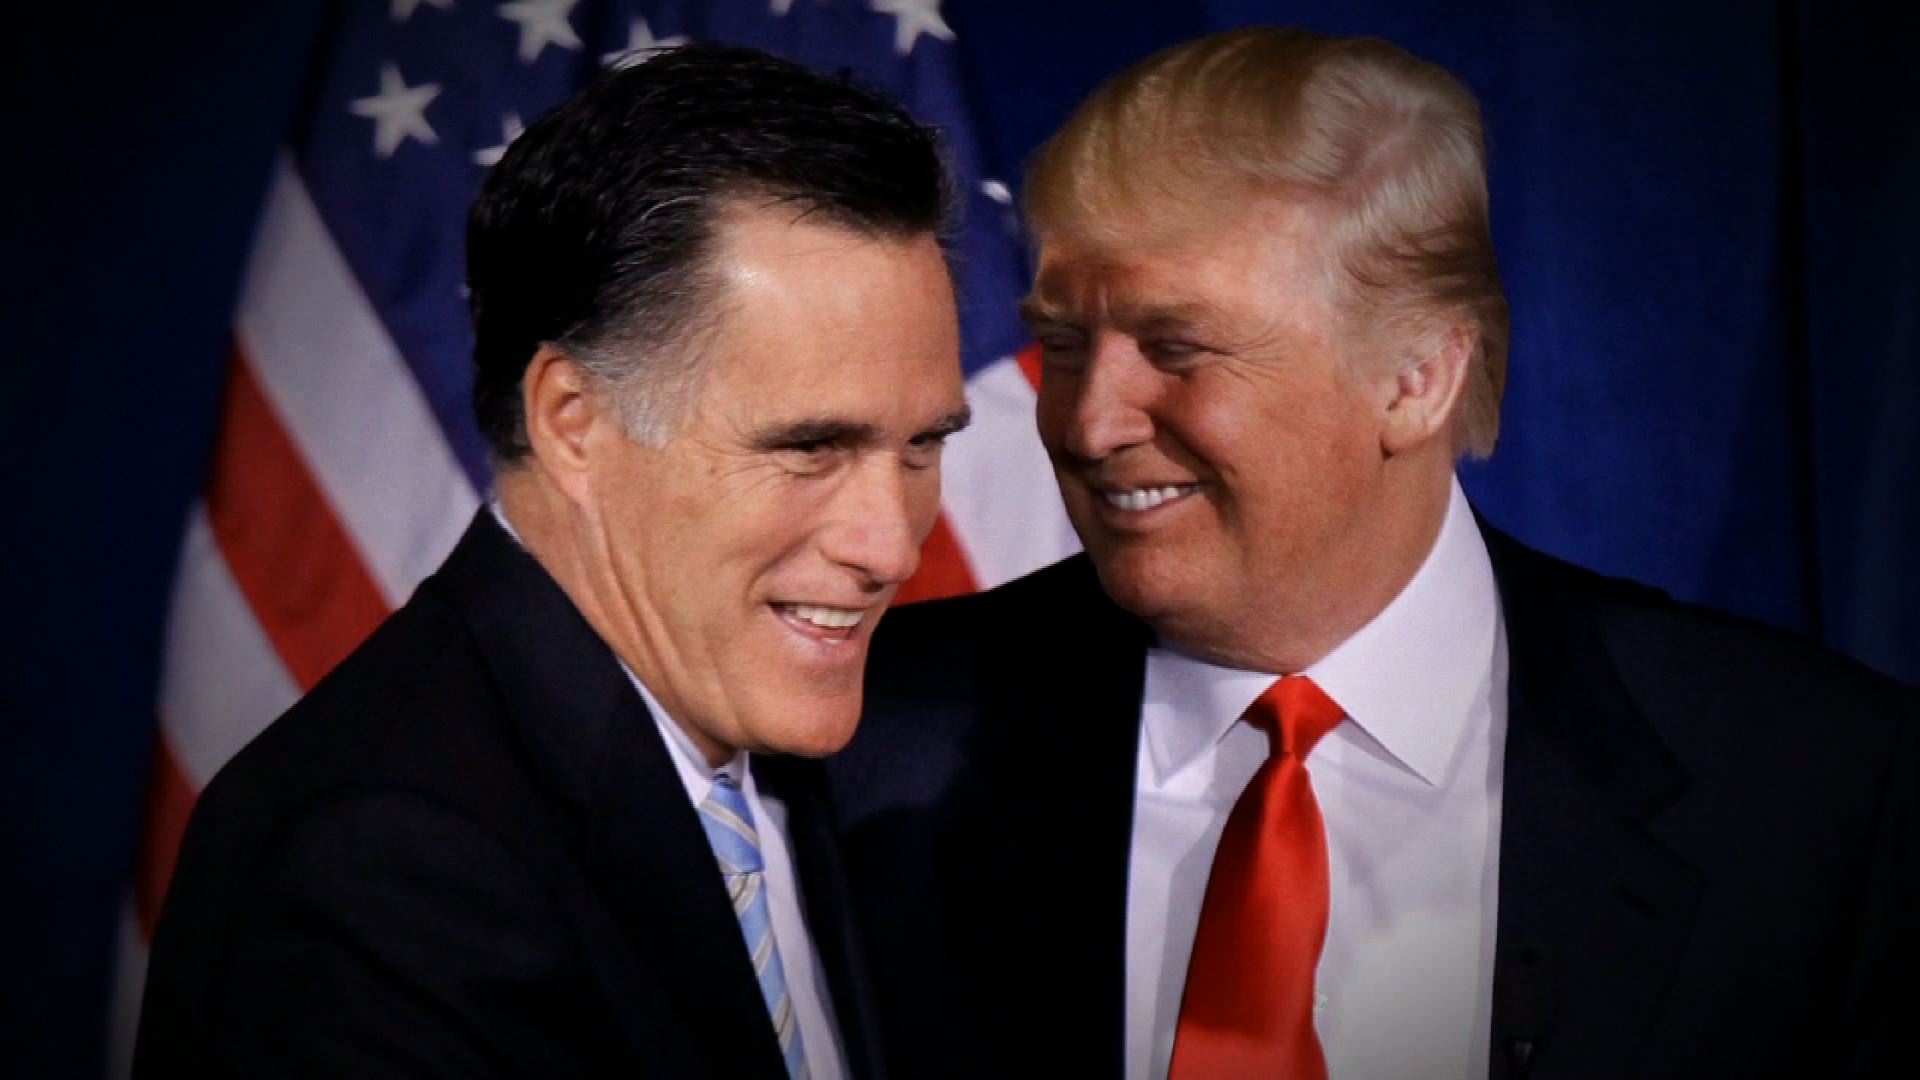 Mitt Romney: 'Donald Trump is a fraud'